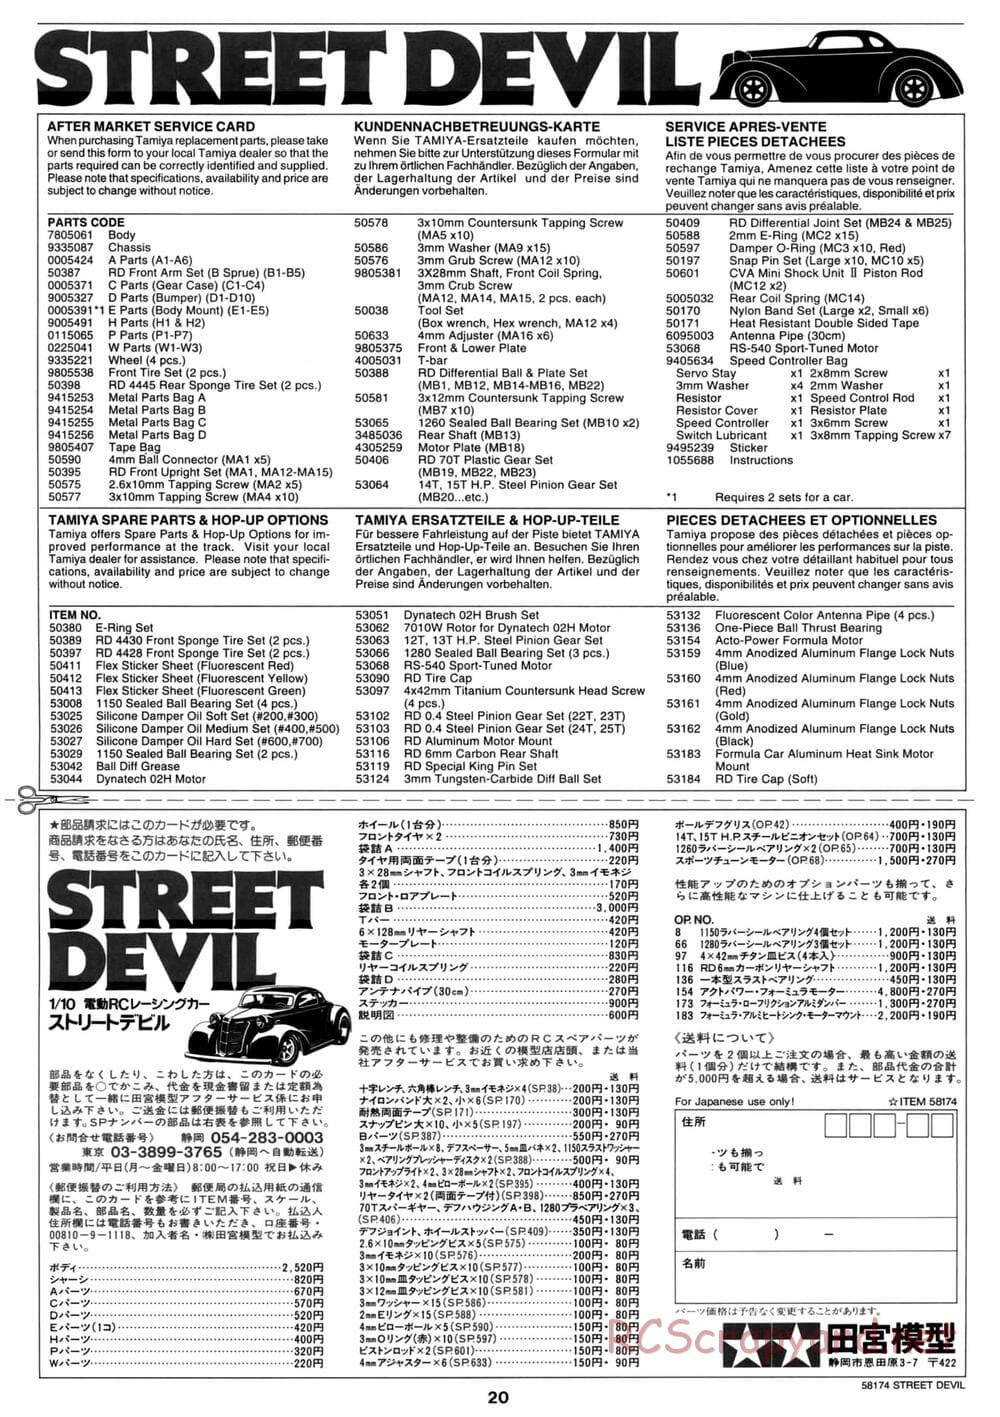 Tamiya - Street Devil - Group-C Chassis - Manual - Page 20